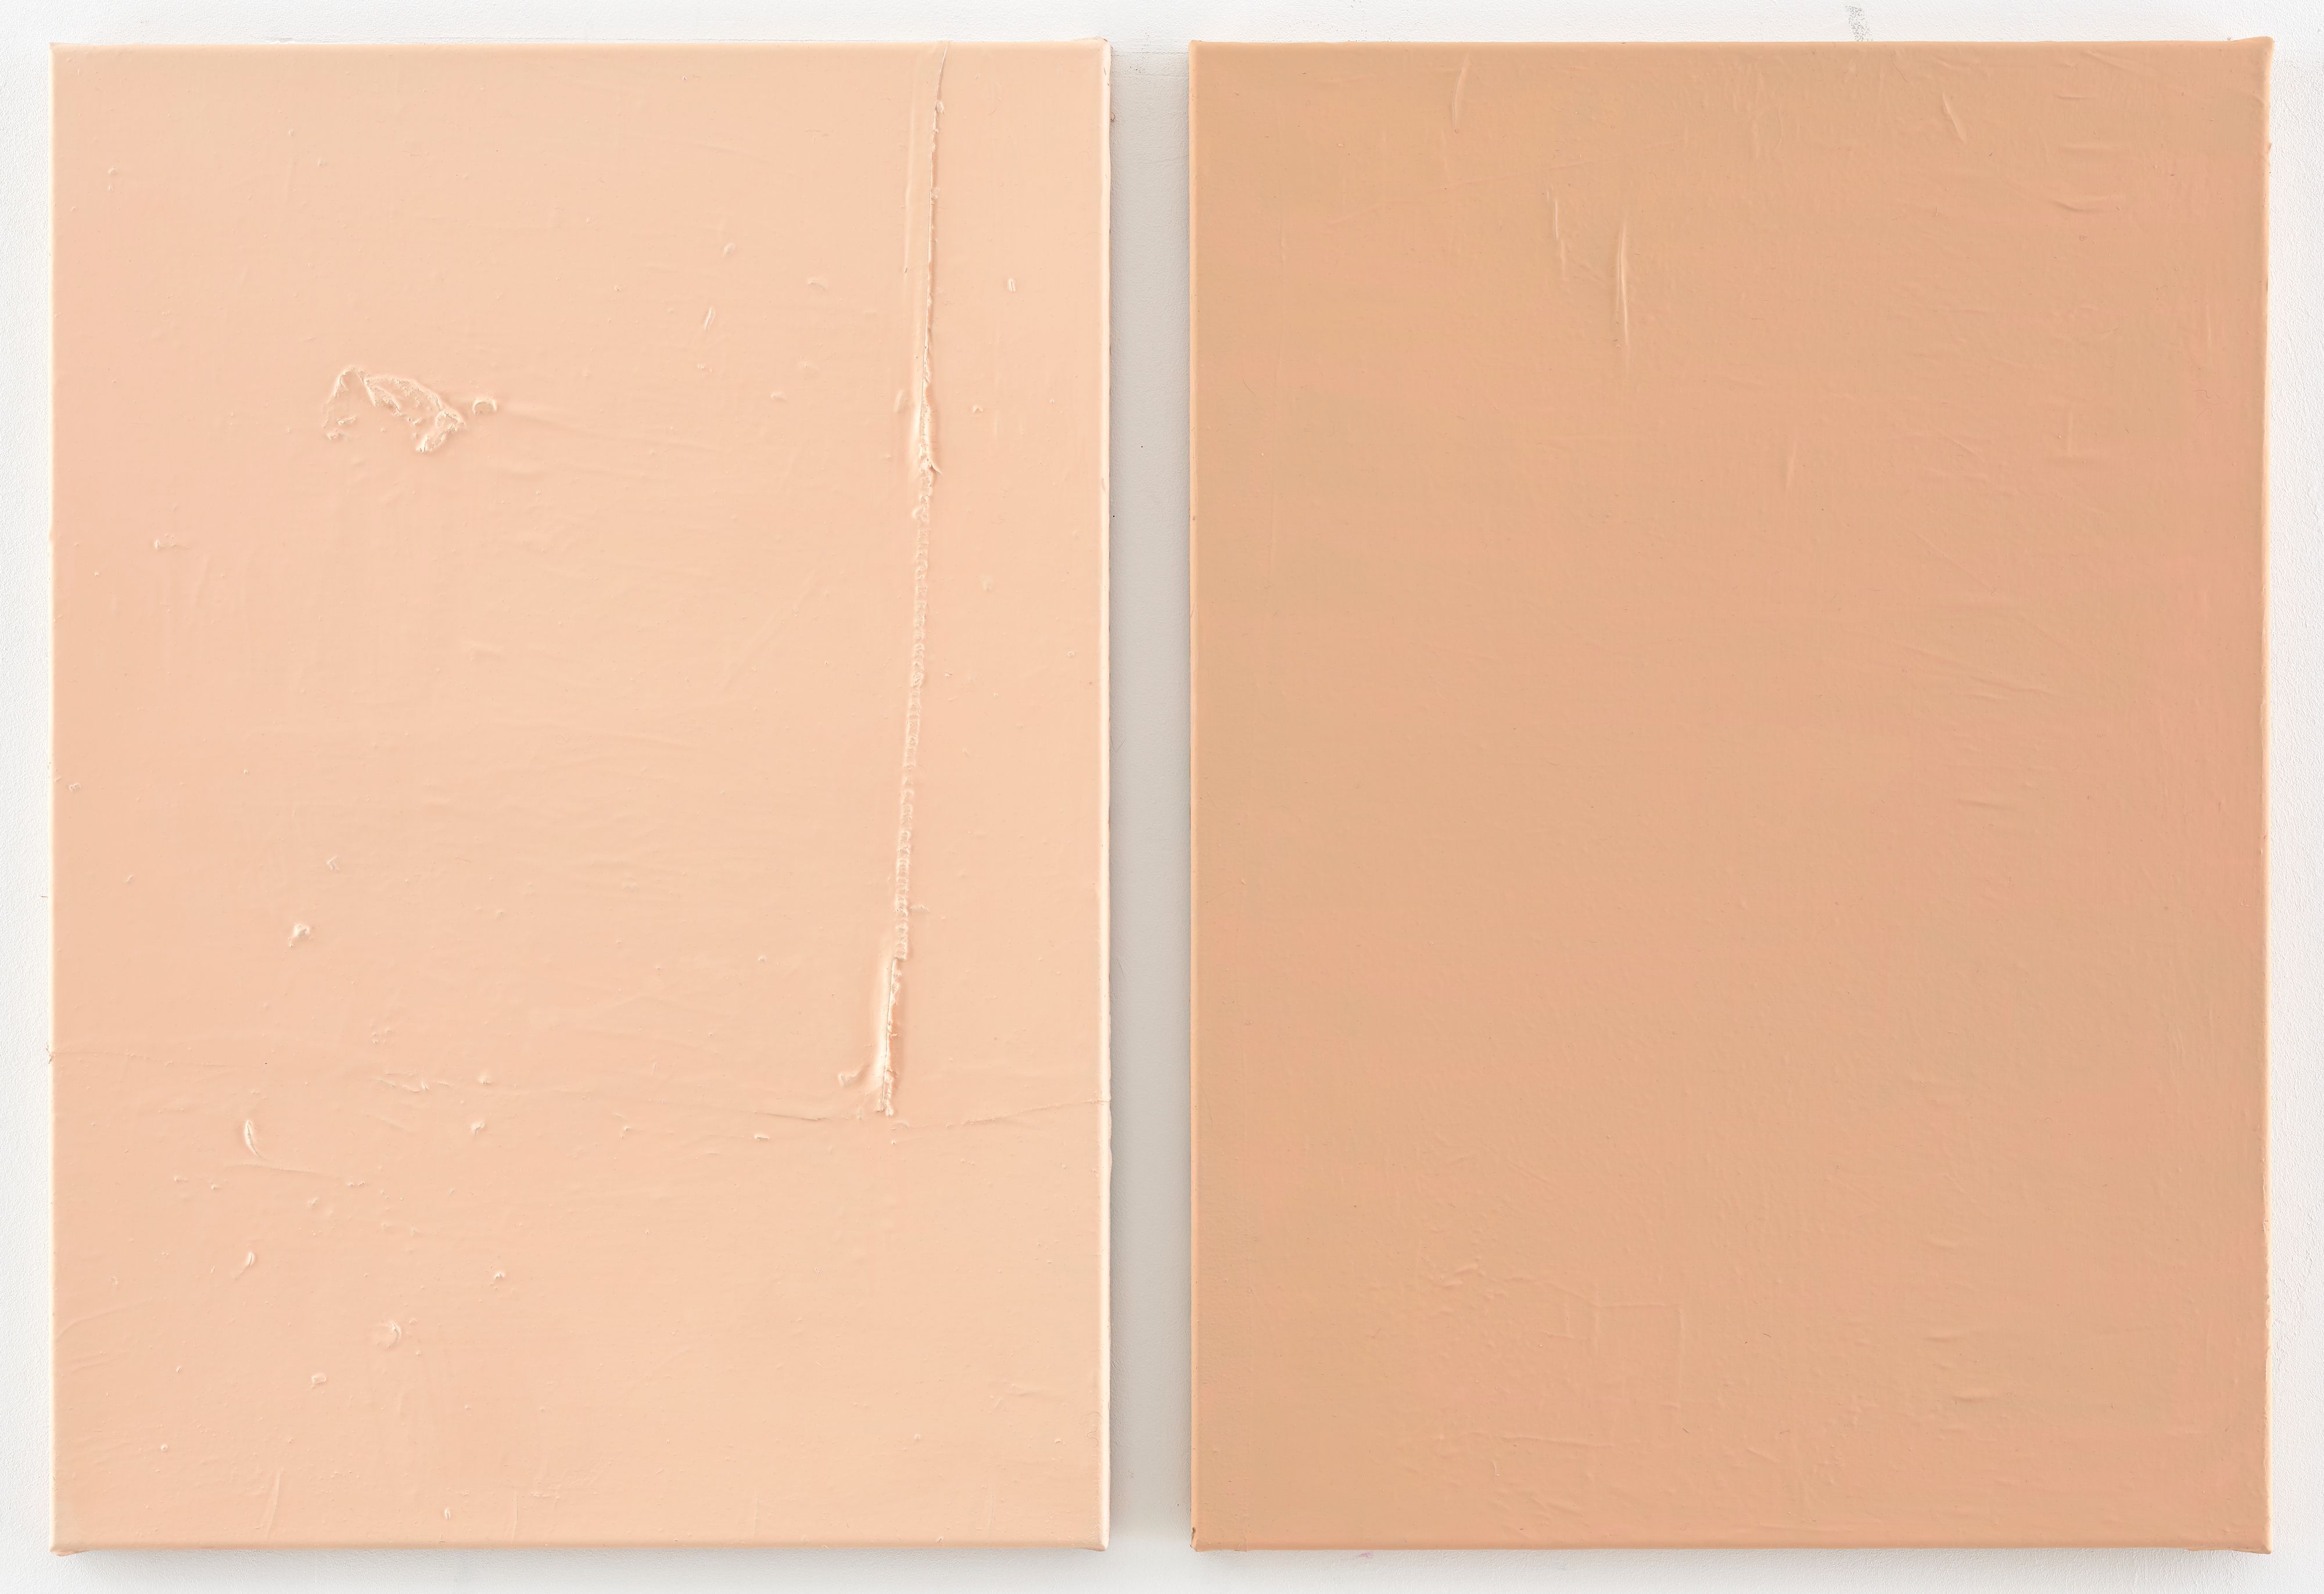 Two rectangular canvases in different light-skinned flesh tones.